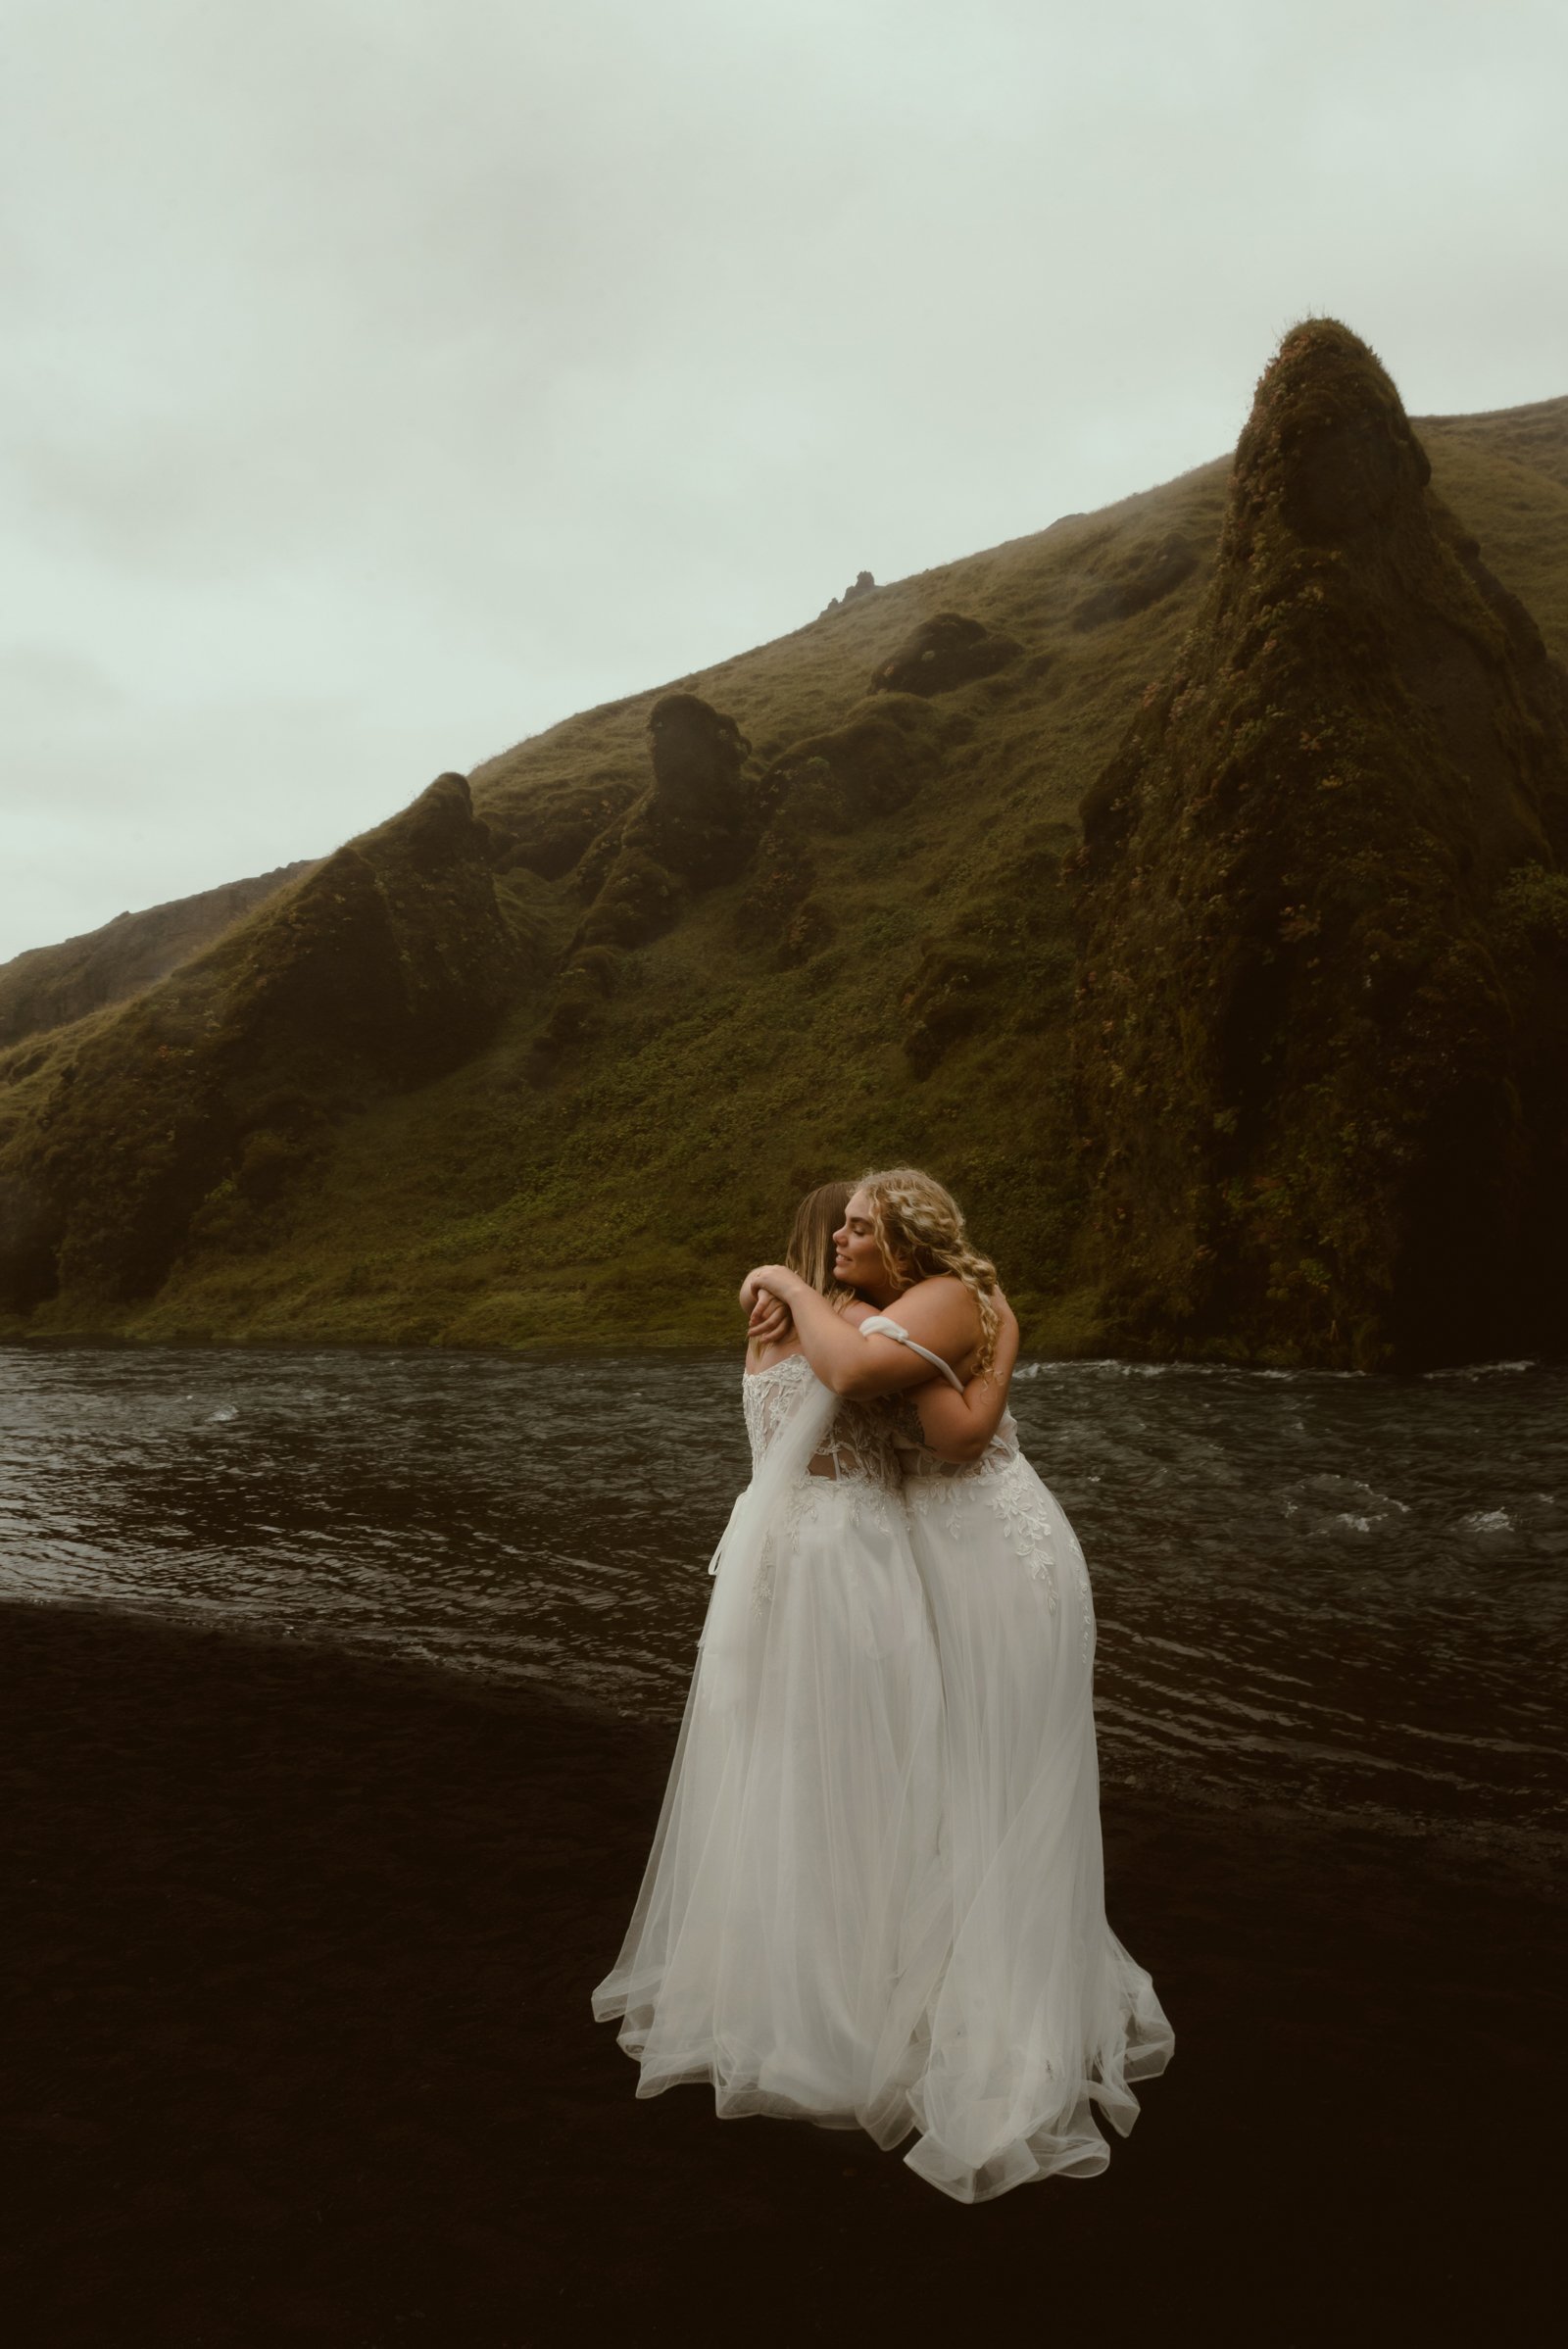 Iceland-Elopement-Photographer-Samantha-Joy-Photo-Destination-Elopement-Photographer (38 of 55) - Copy.jpg